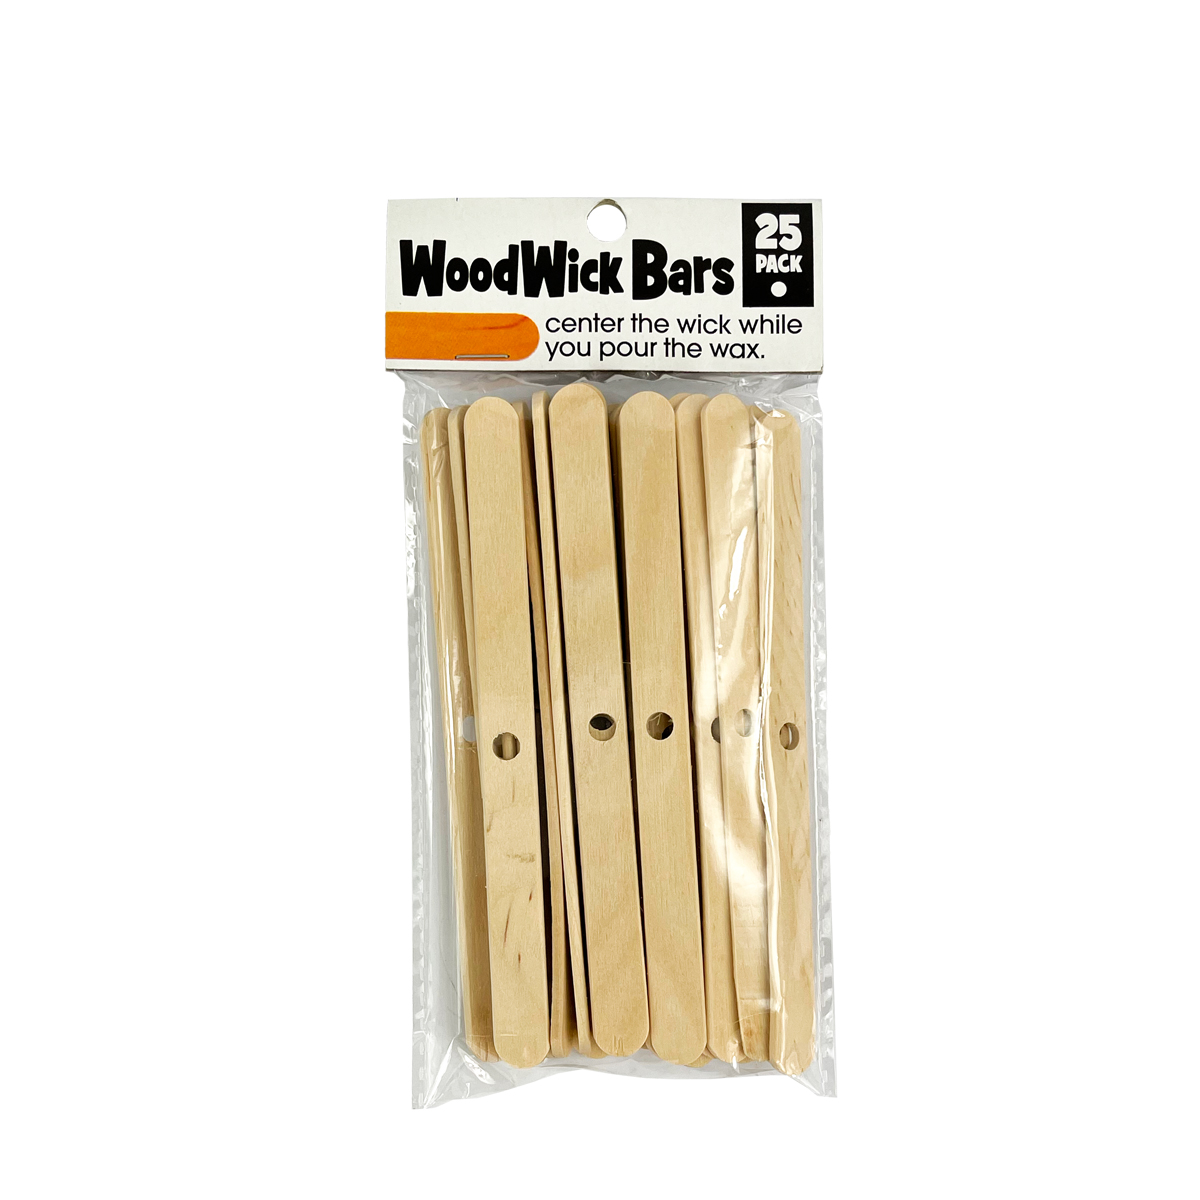 Wood Wick Bars